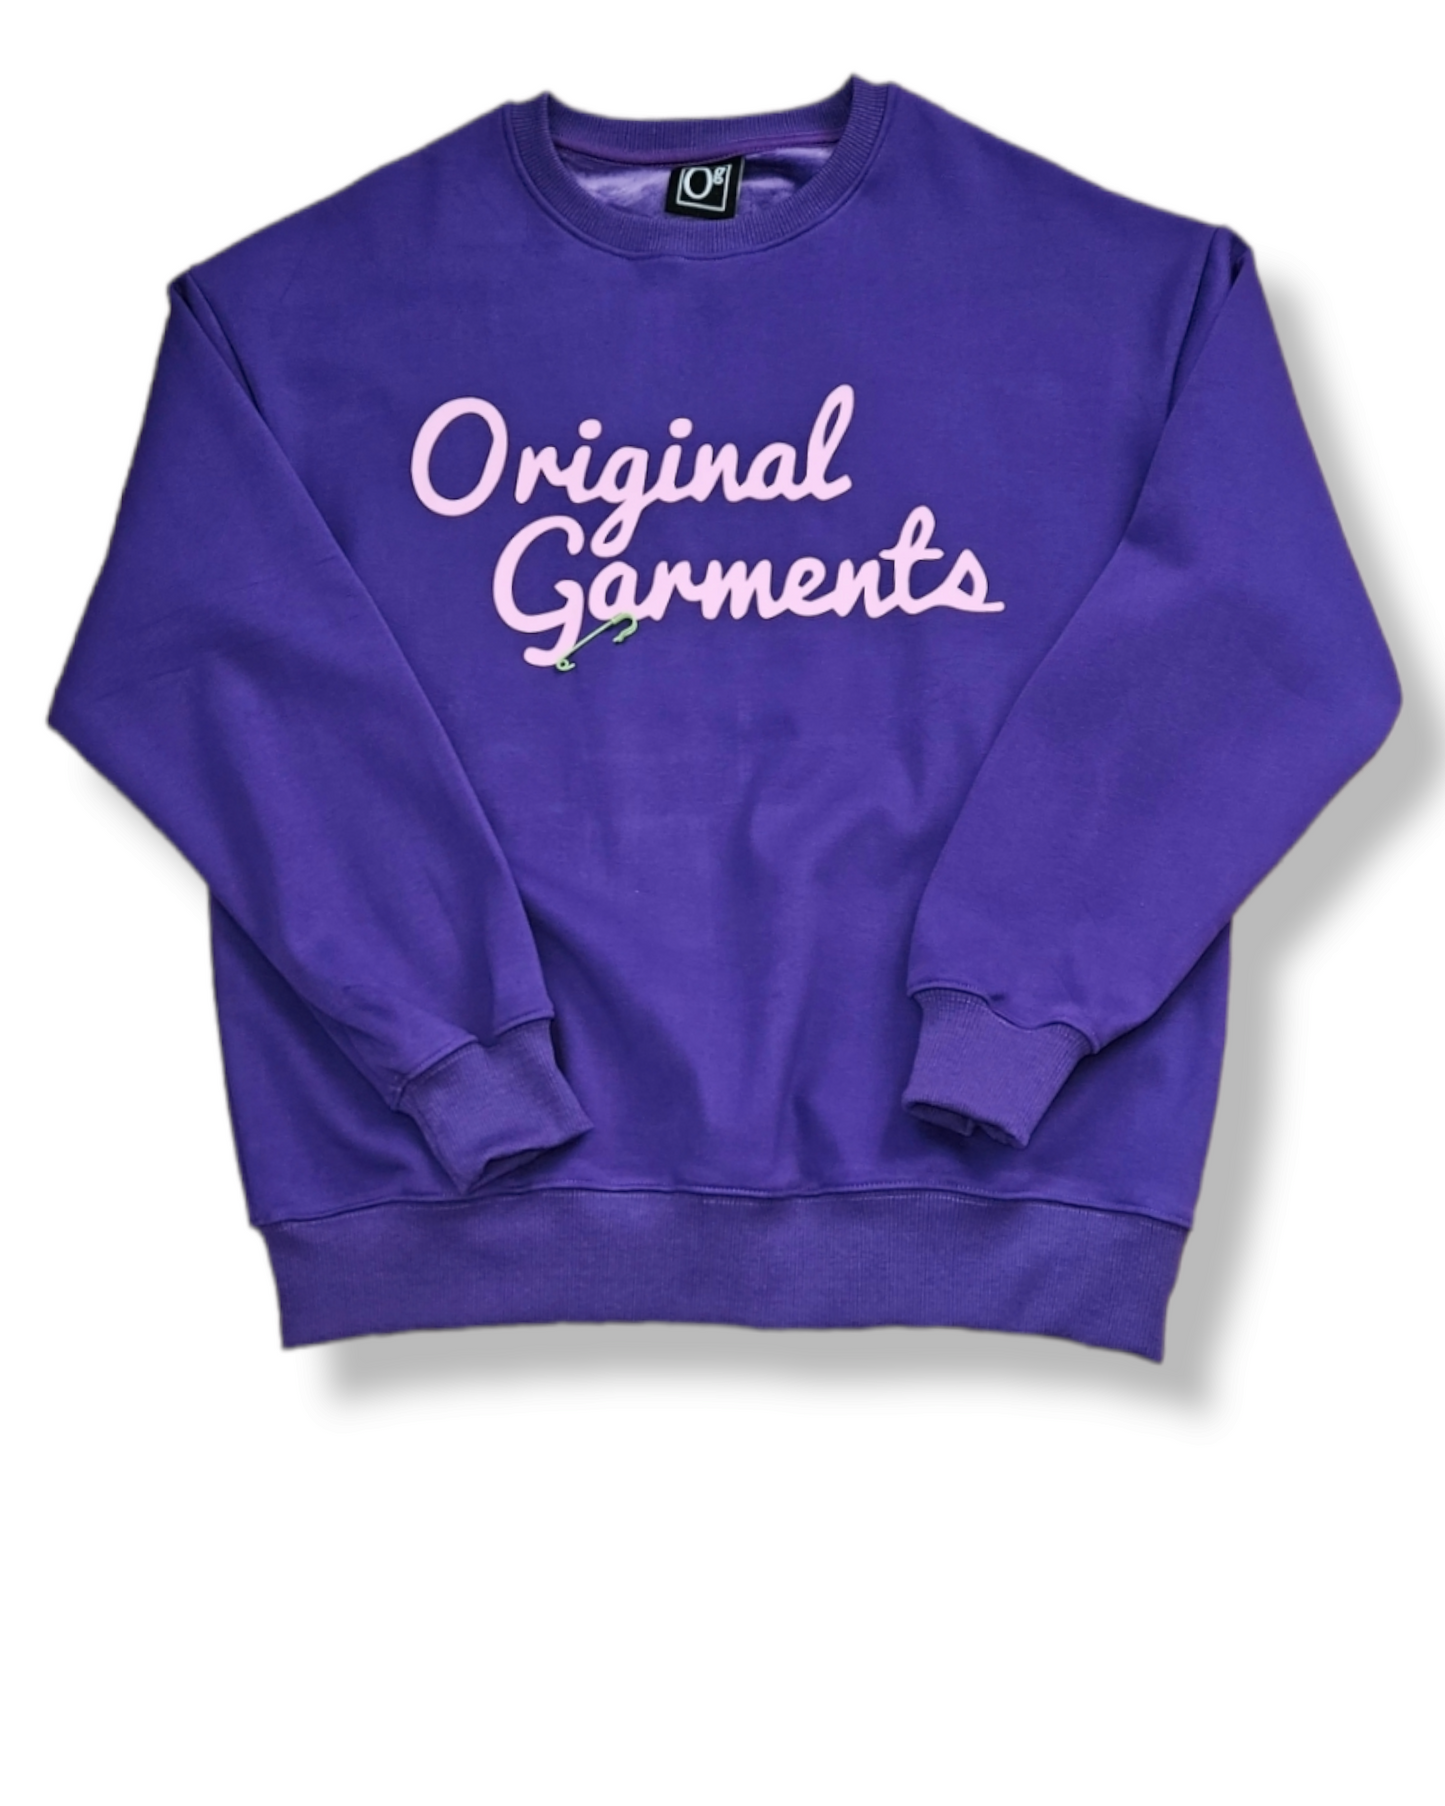 oG Signature Sweatshirt Purple/Soft Pink